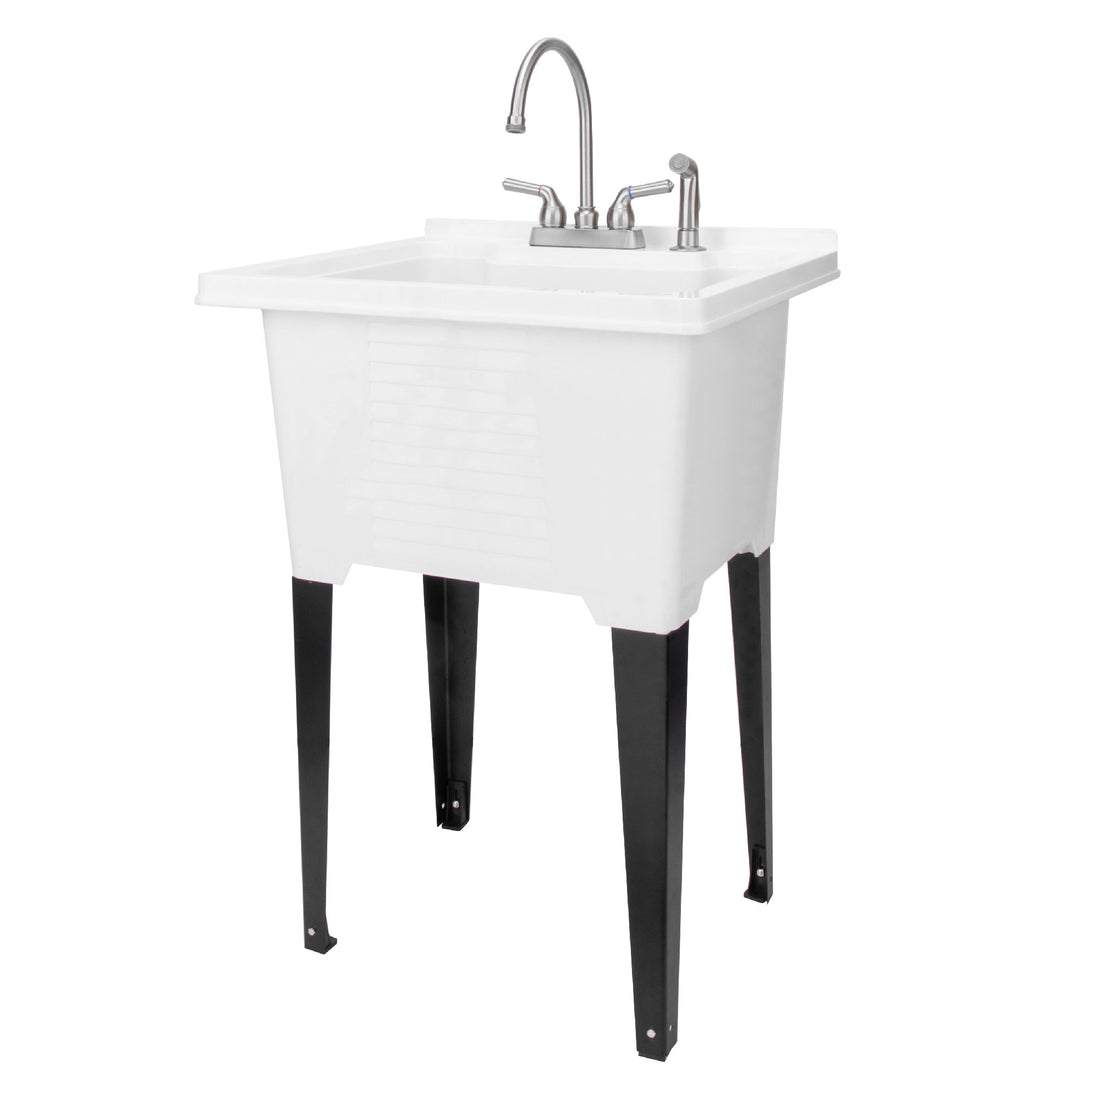 Tehila Luxe Freestanding White Utility Sink with Stainless Steel Finish Gooseneck Faucet - Utility sinks vanites Tehila